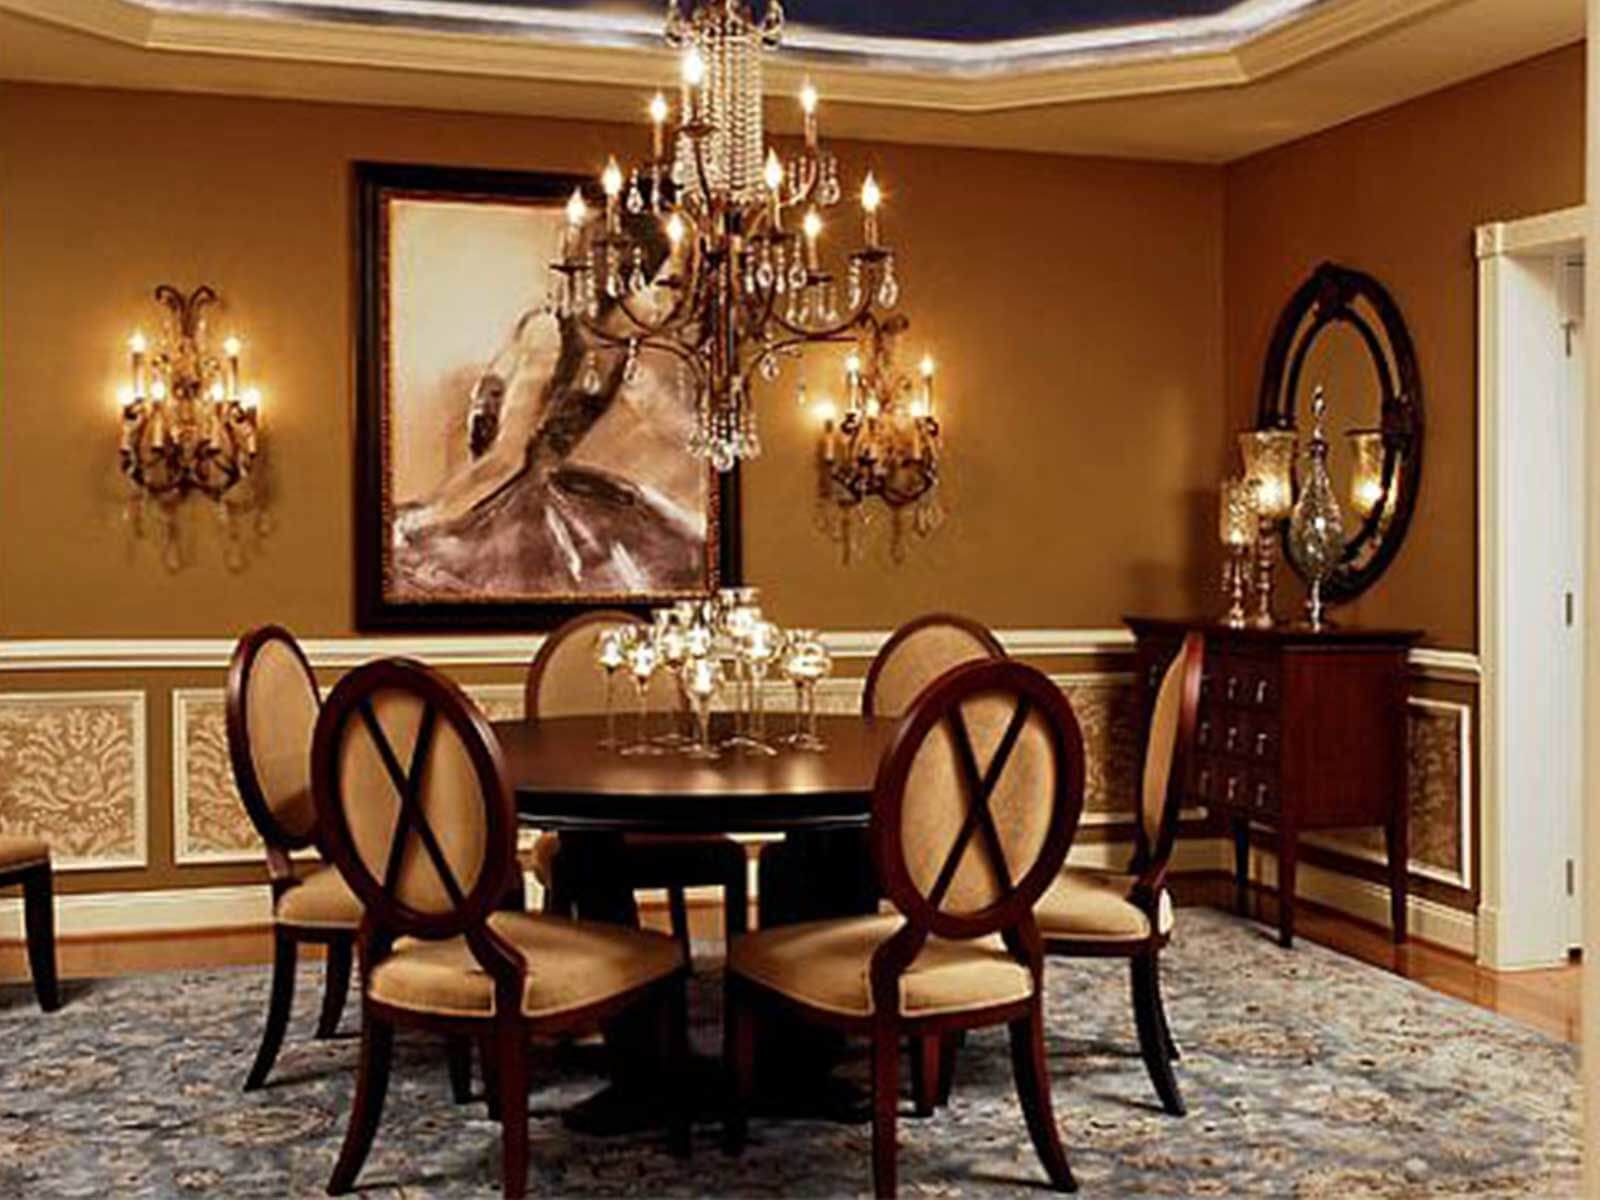 Dining Room interior design